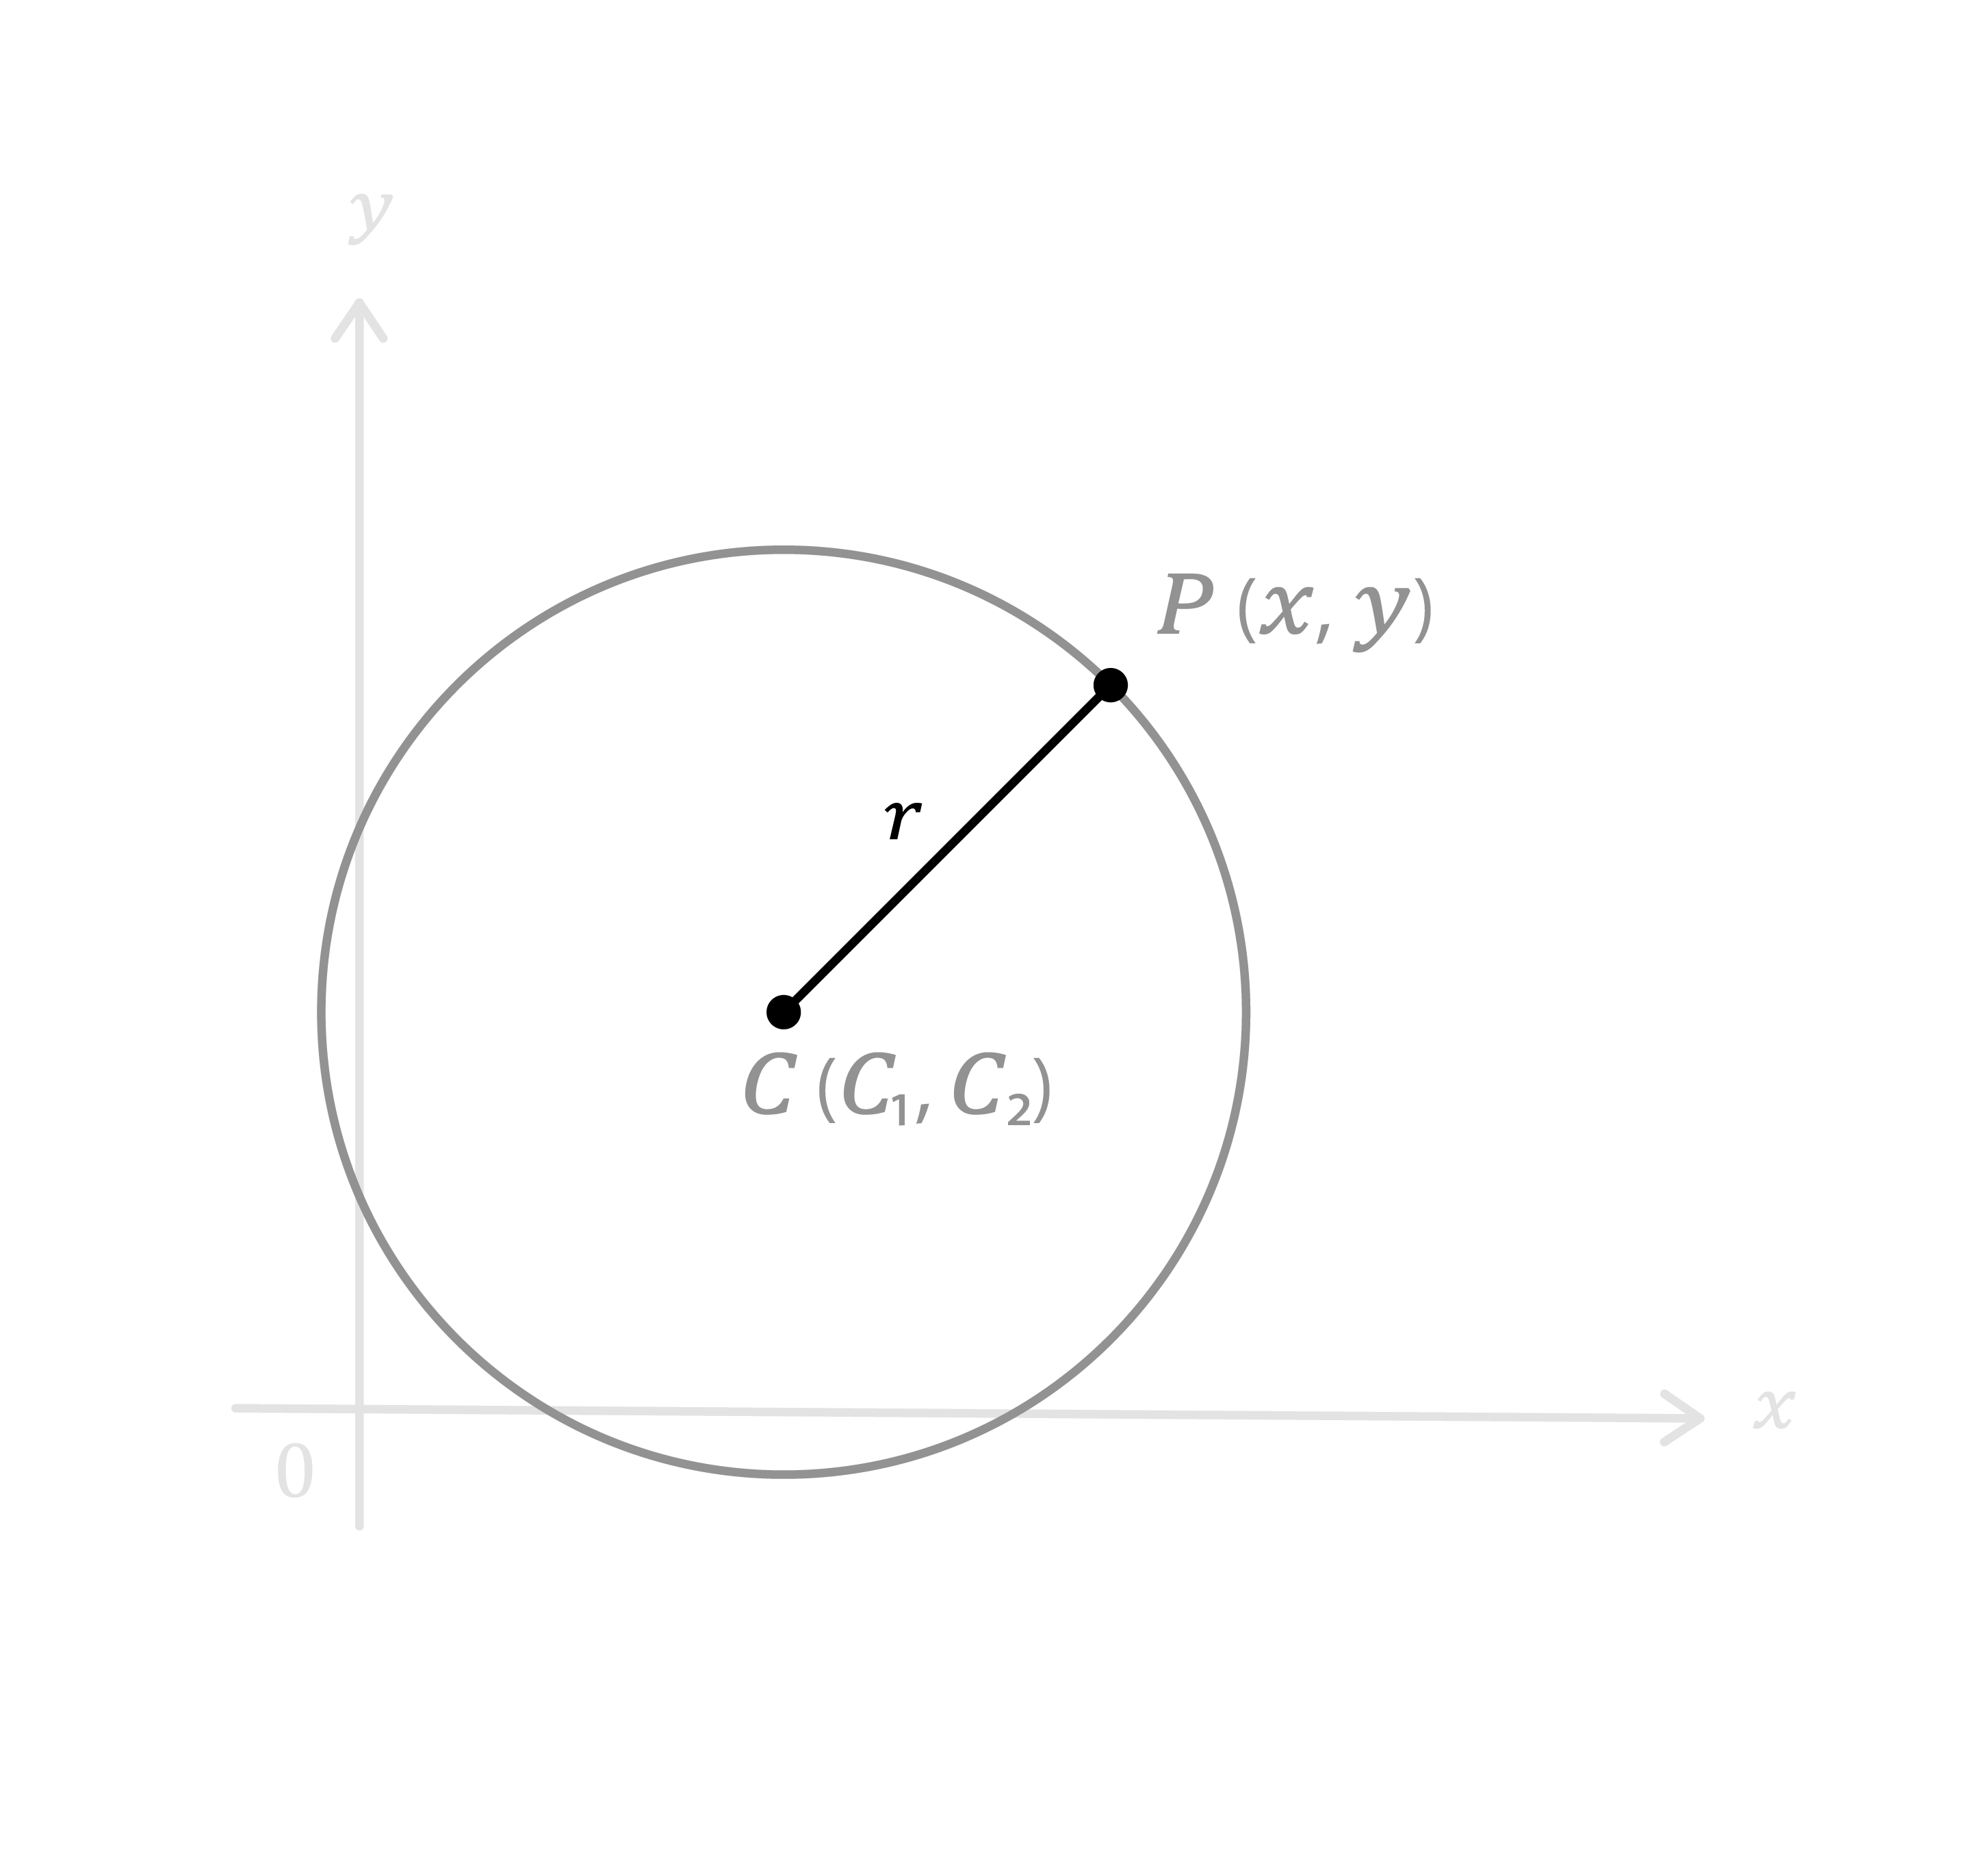 Matemáticas; Cónicas; 1. Bachillerato; Circunferencia: Elementos y ecuación general